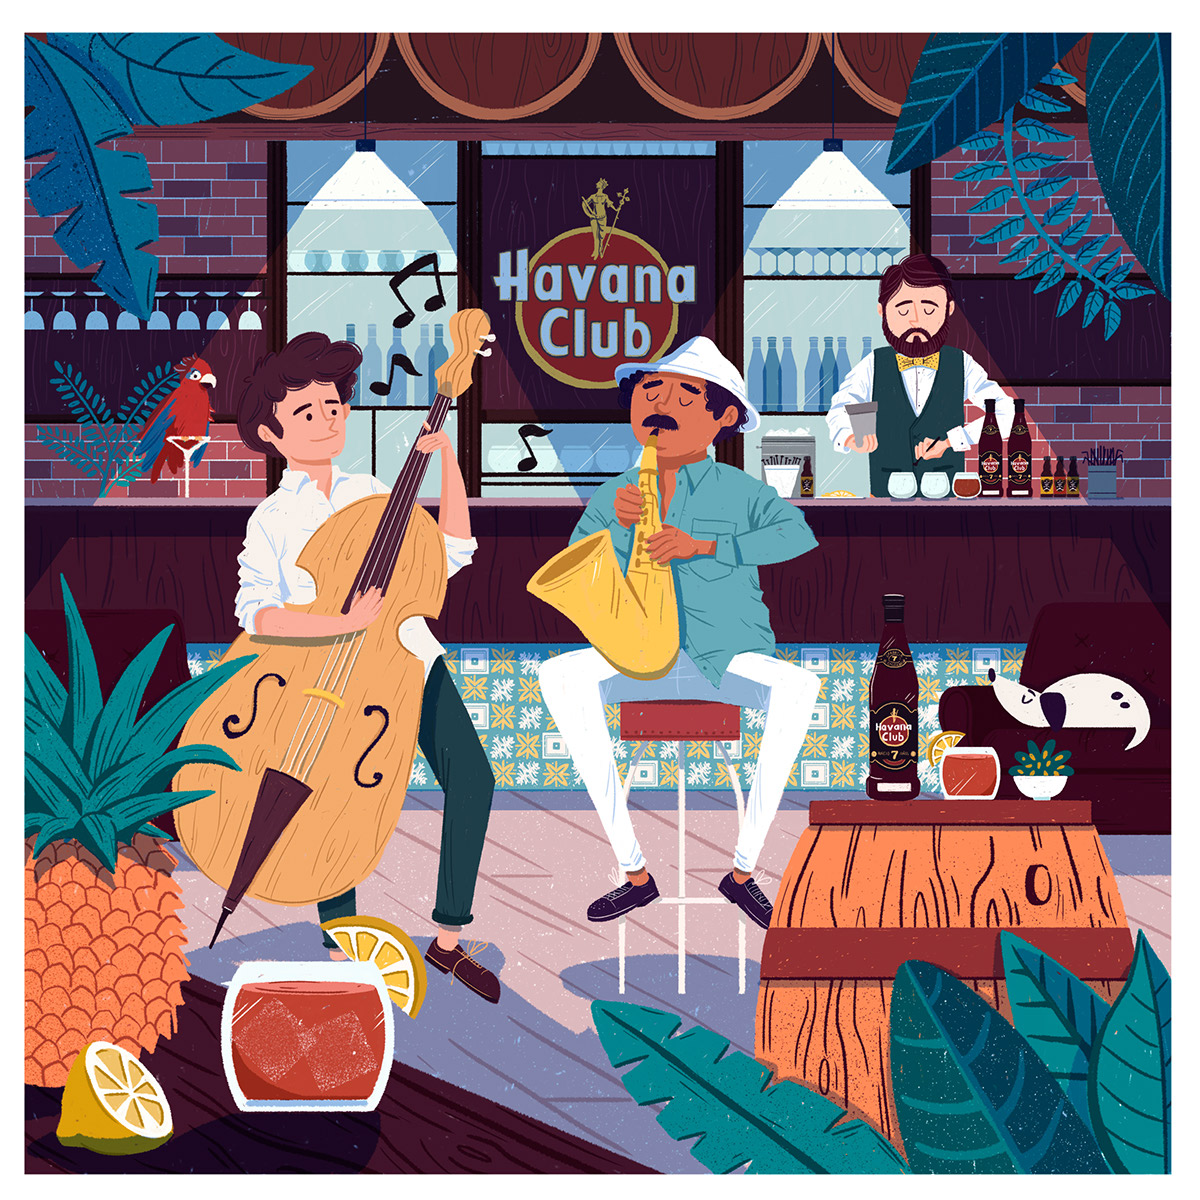 Havana Club havana club 7 cuba musicians dog saxo band cuban editorial